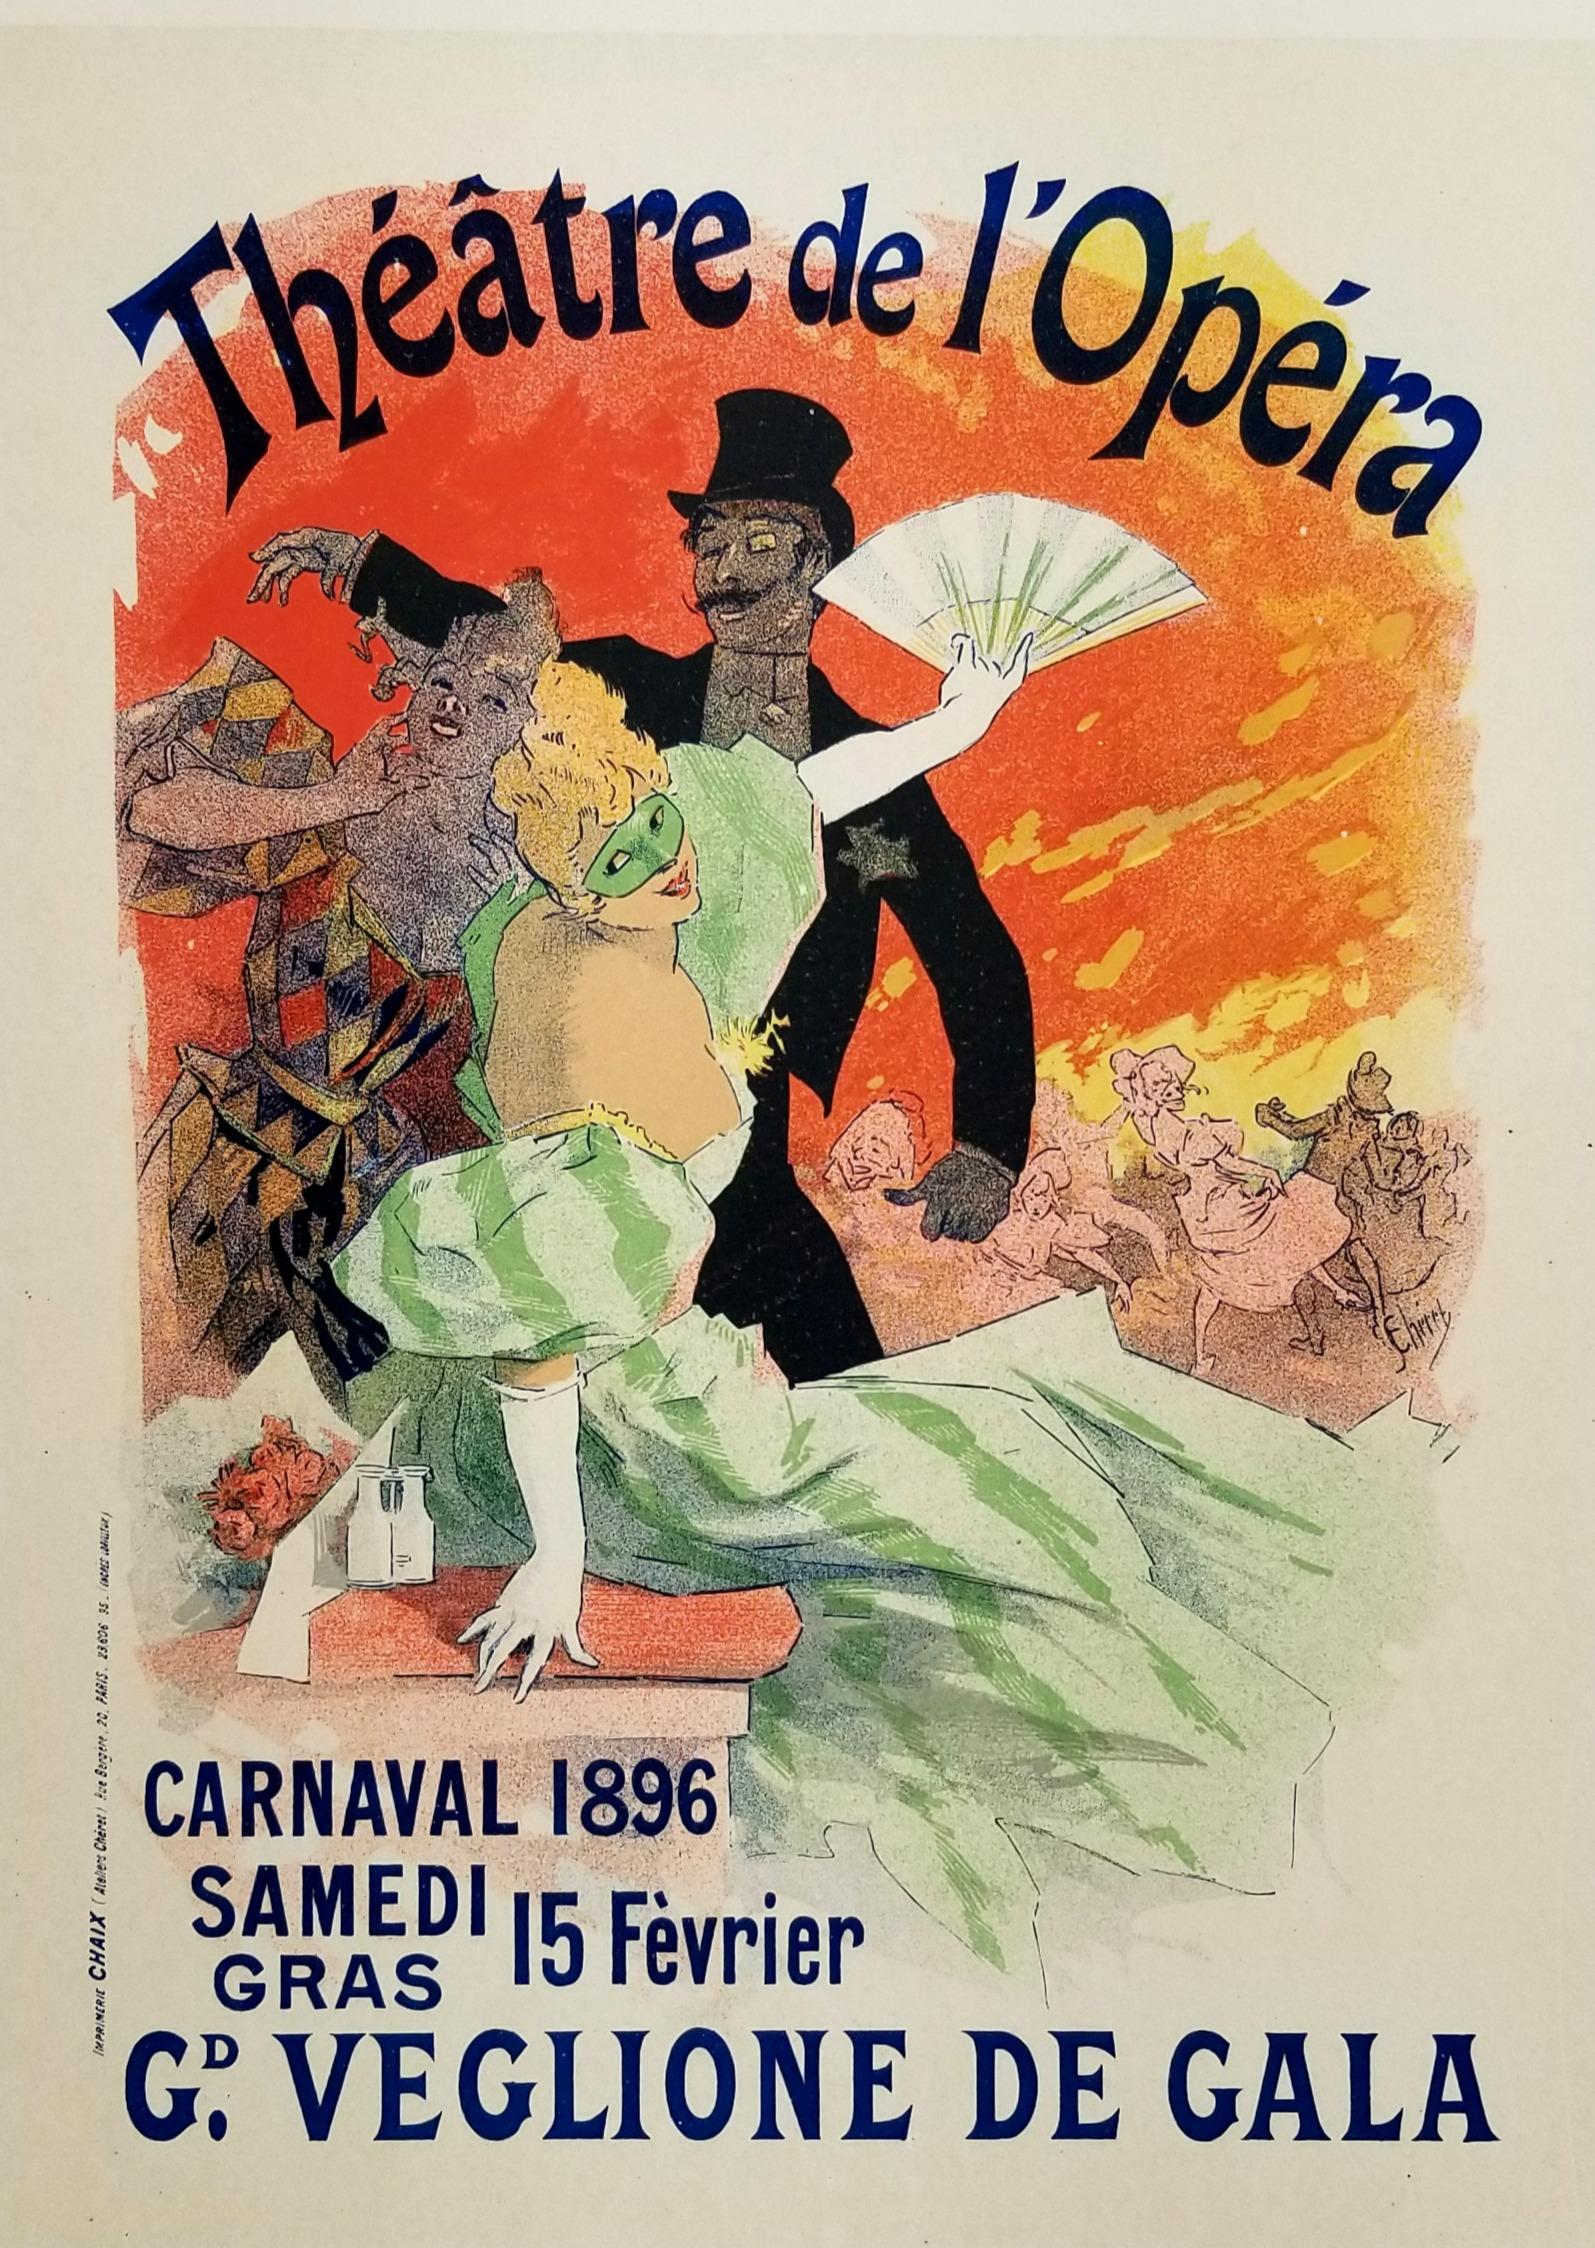 Jules Chéret Print - Carnaval, Grand Veglione de Gala. 